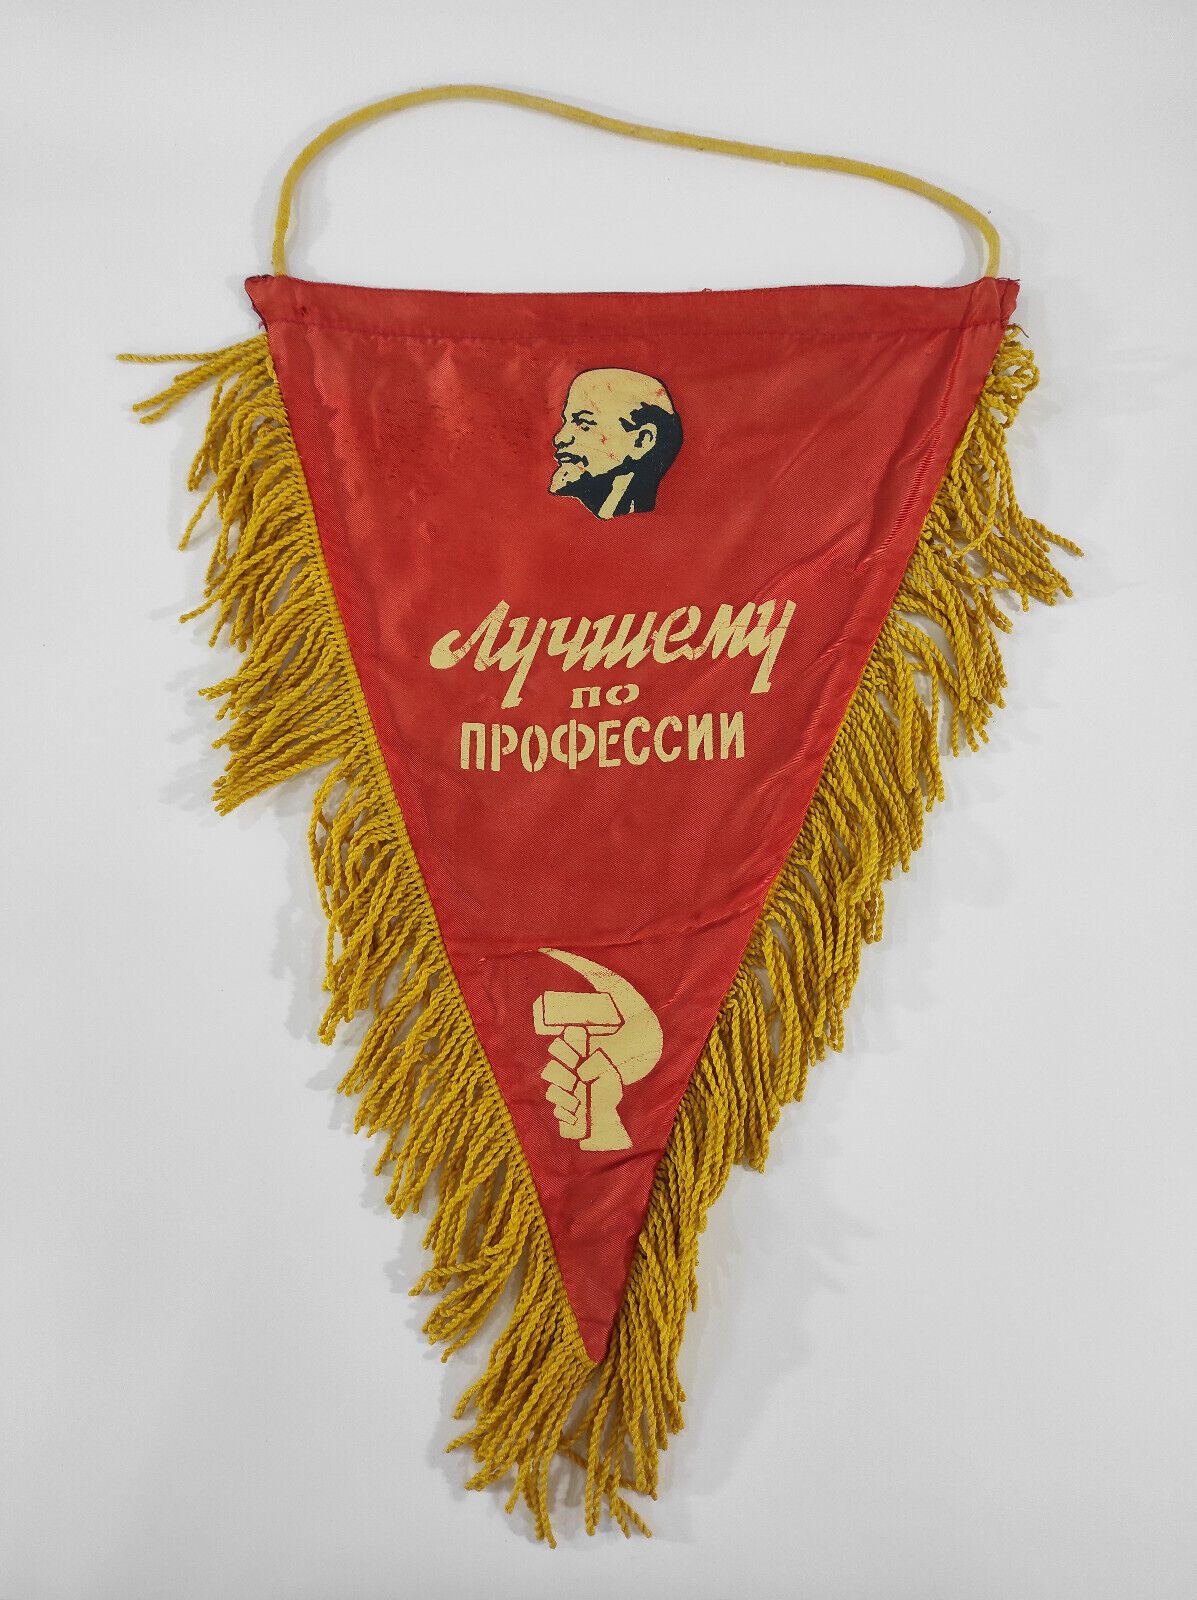 Soviet pennant, \